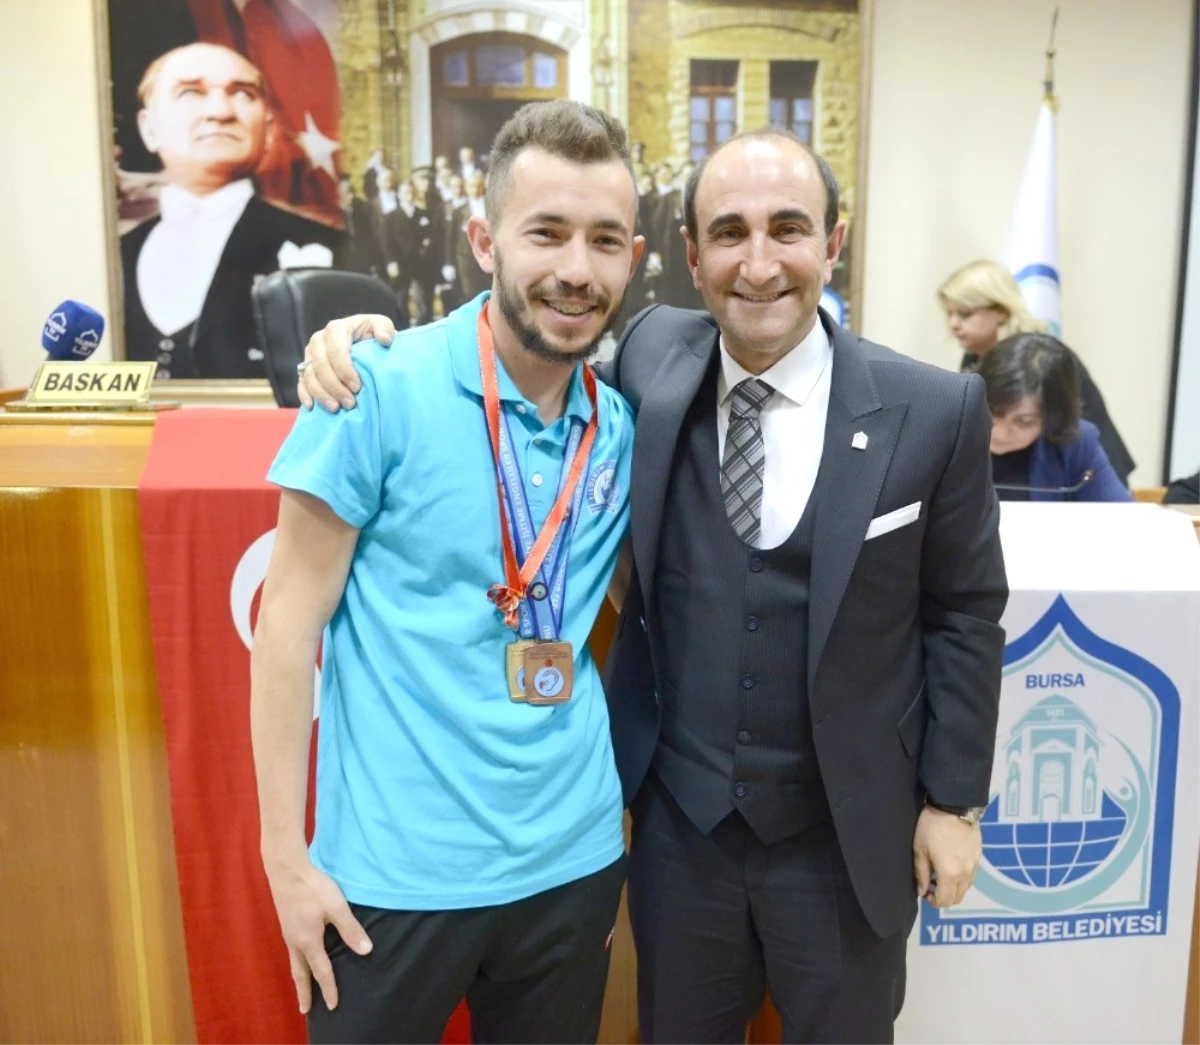 Bursalı Atlet Olimpiyatlarda Bronz Madalya Kazandı